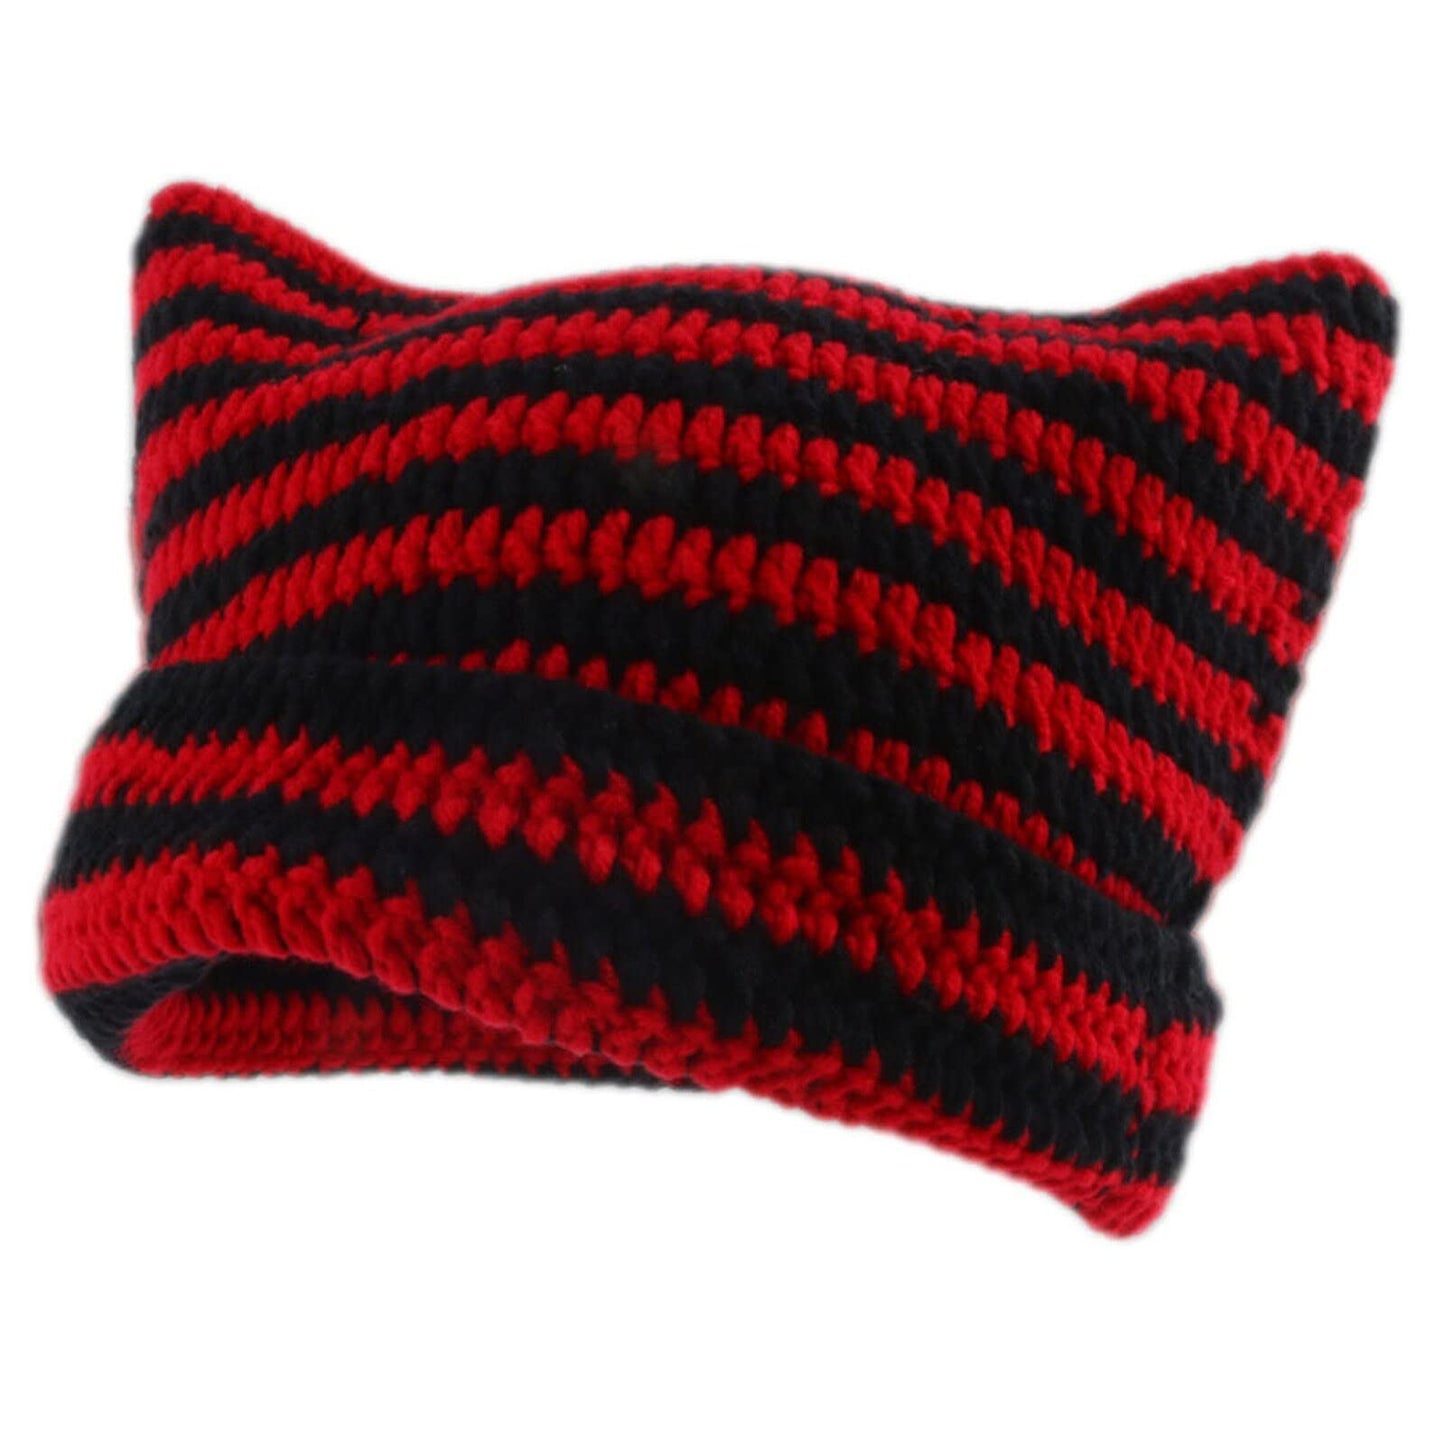 Cat Beanie - Red & Black Stripped Hat